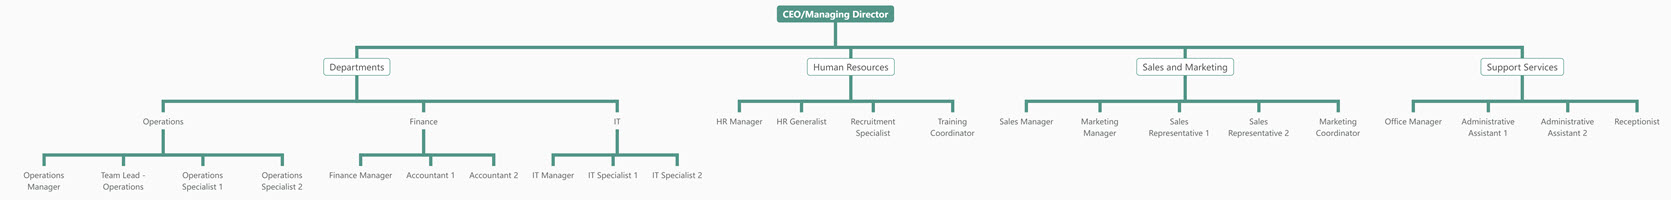 Organizational Chart of Office